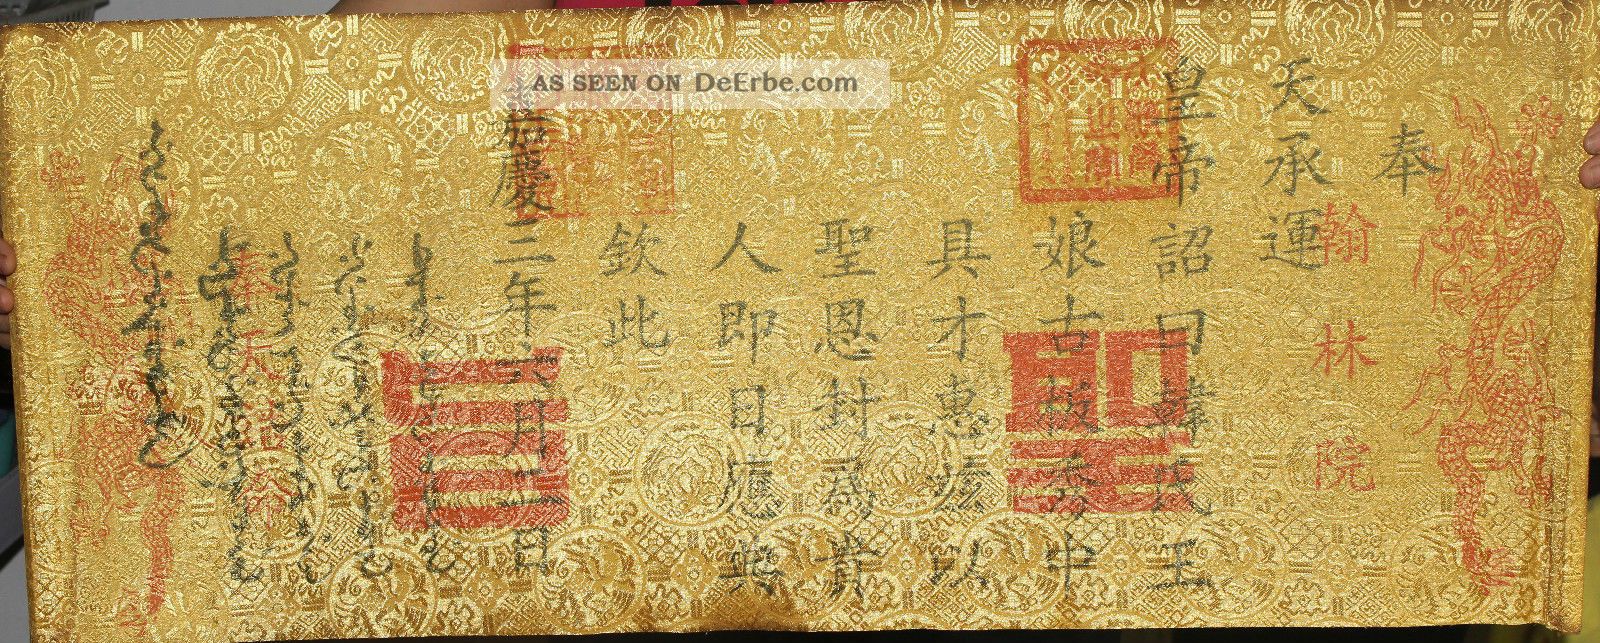 80cm Altes Dekret Aus Gelbes Papier China Asiatika: China Bild